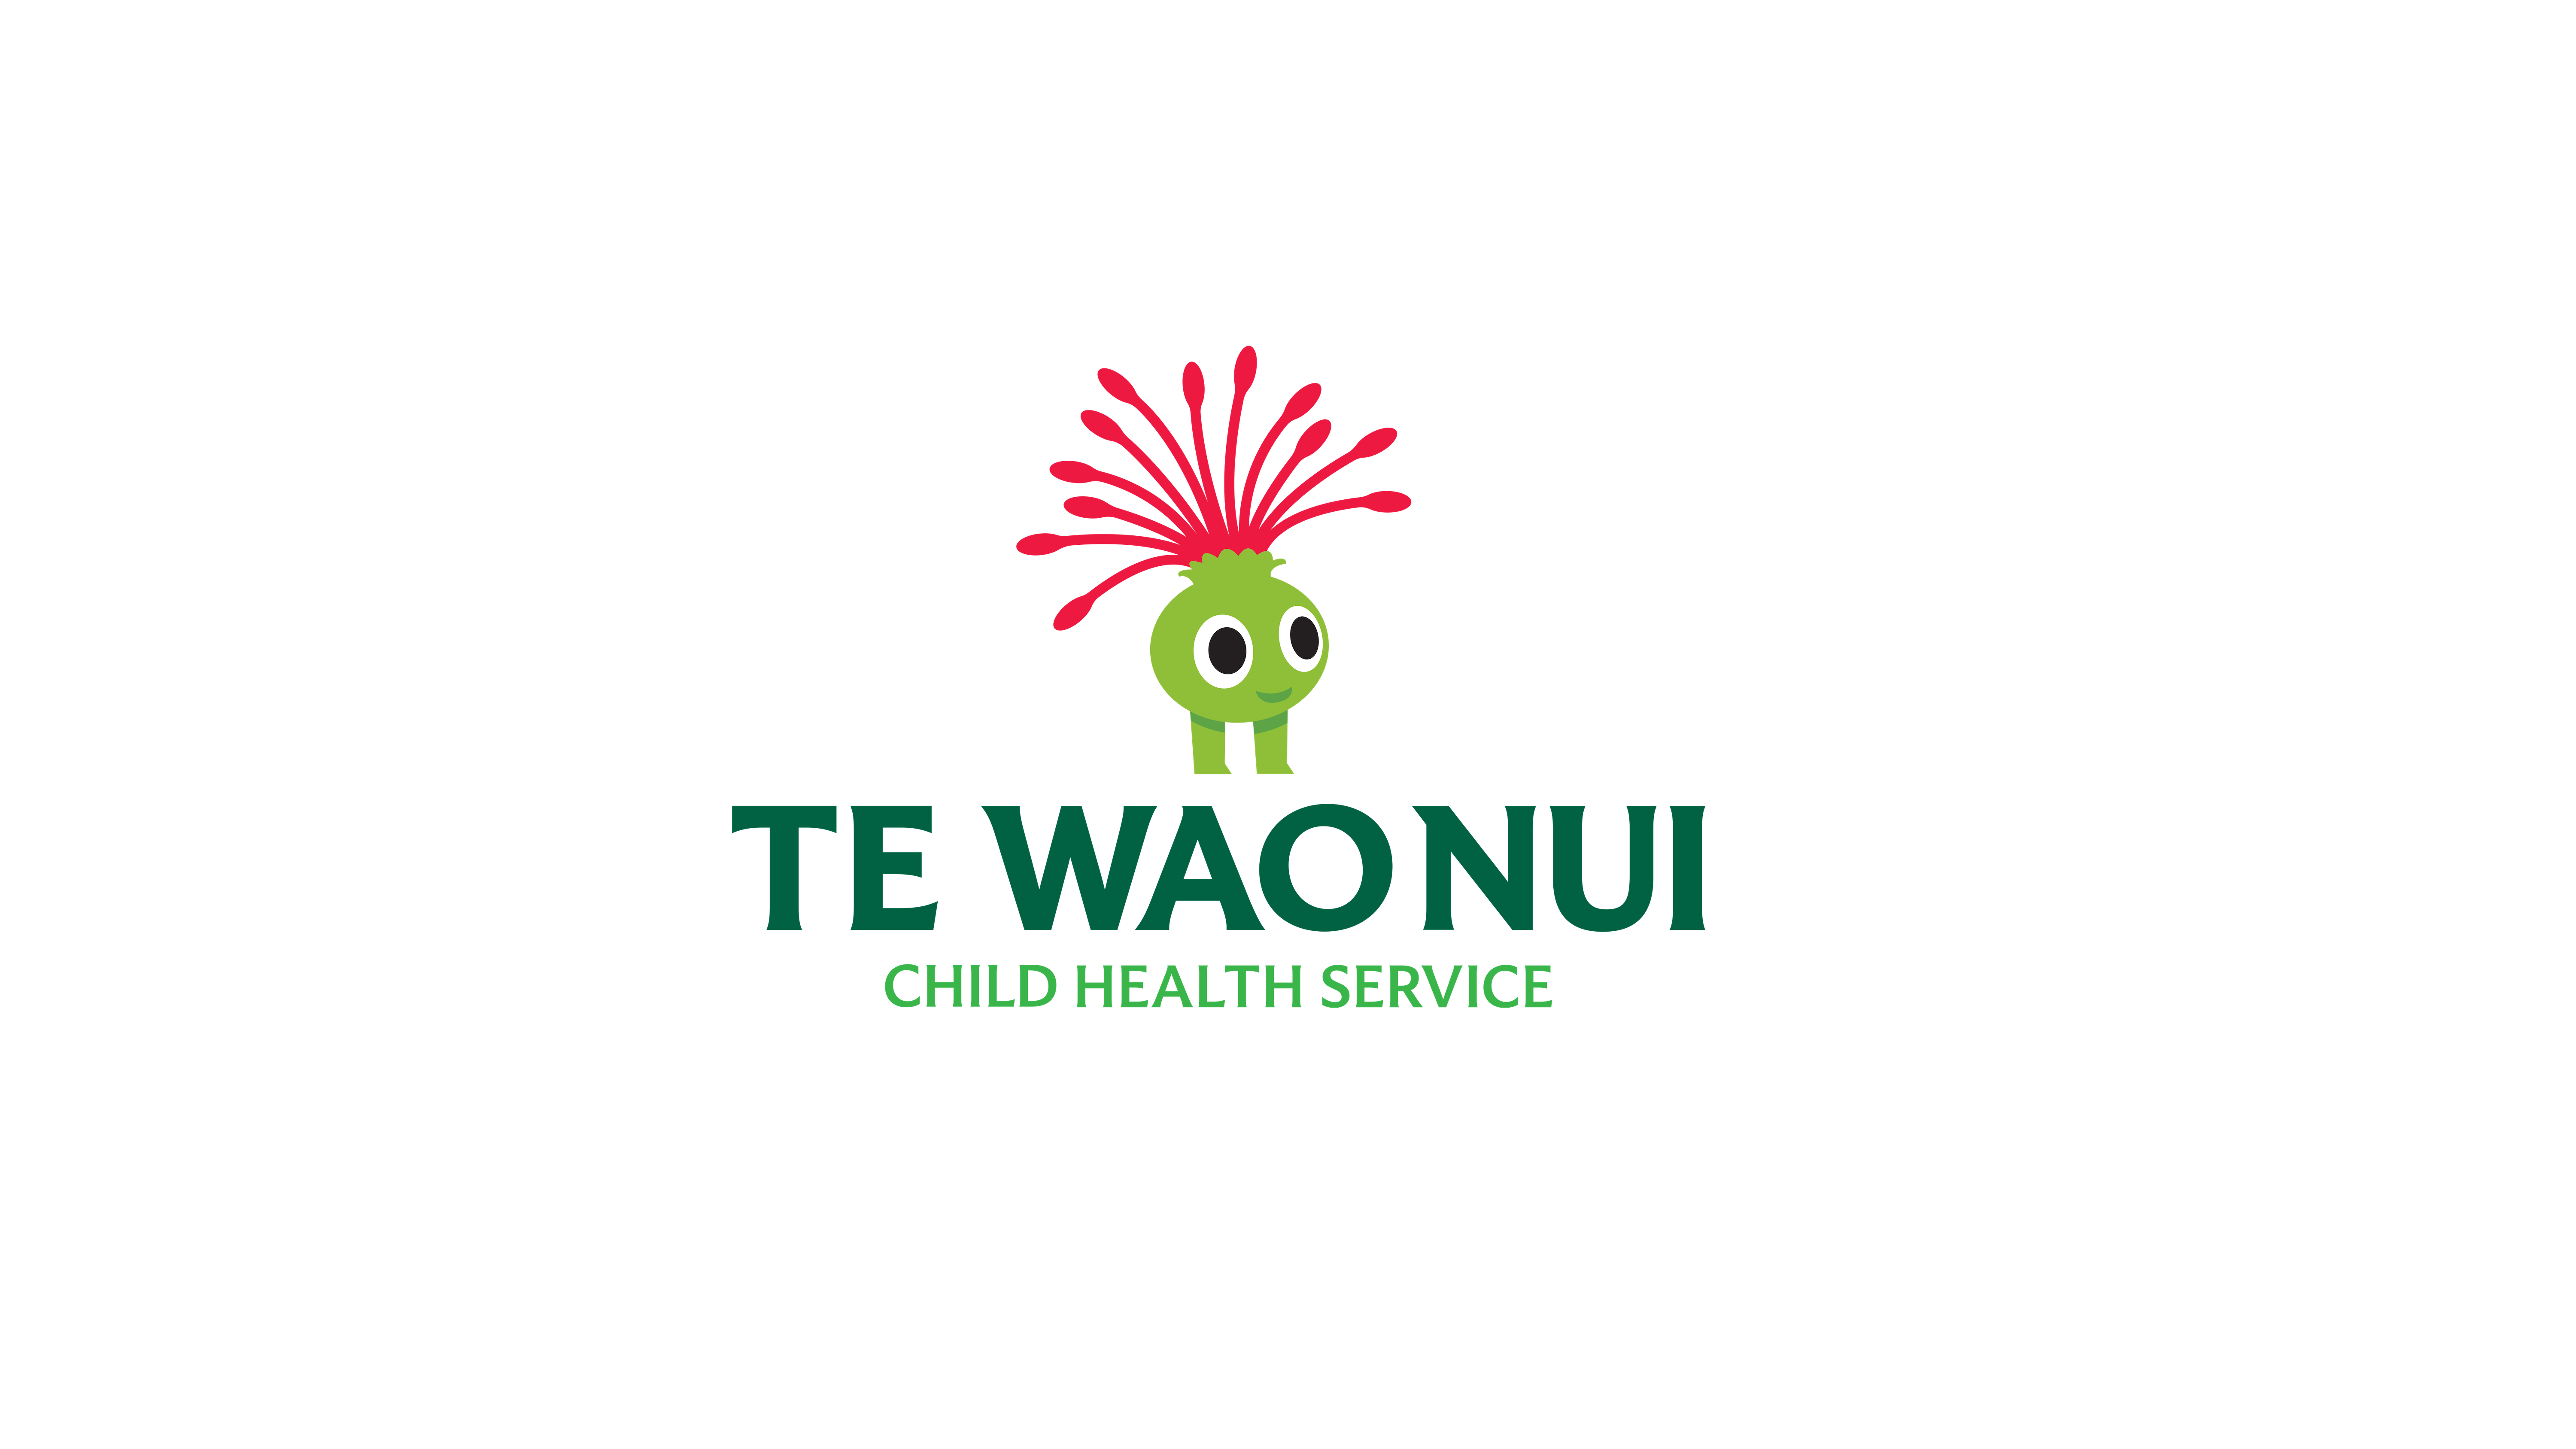 Wellington Regional Children's Hospital (Te Wao Nui)